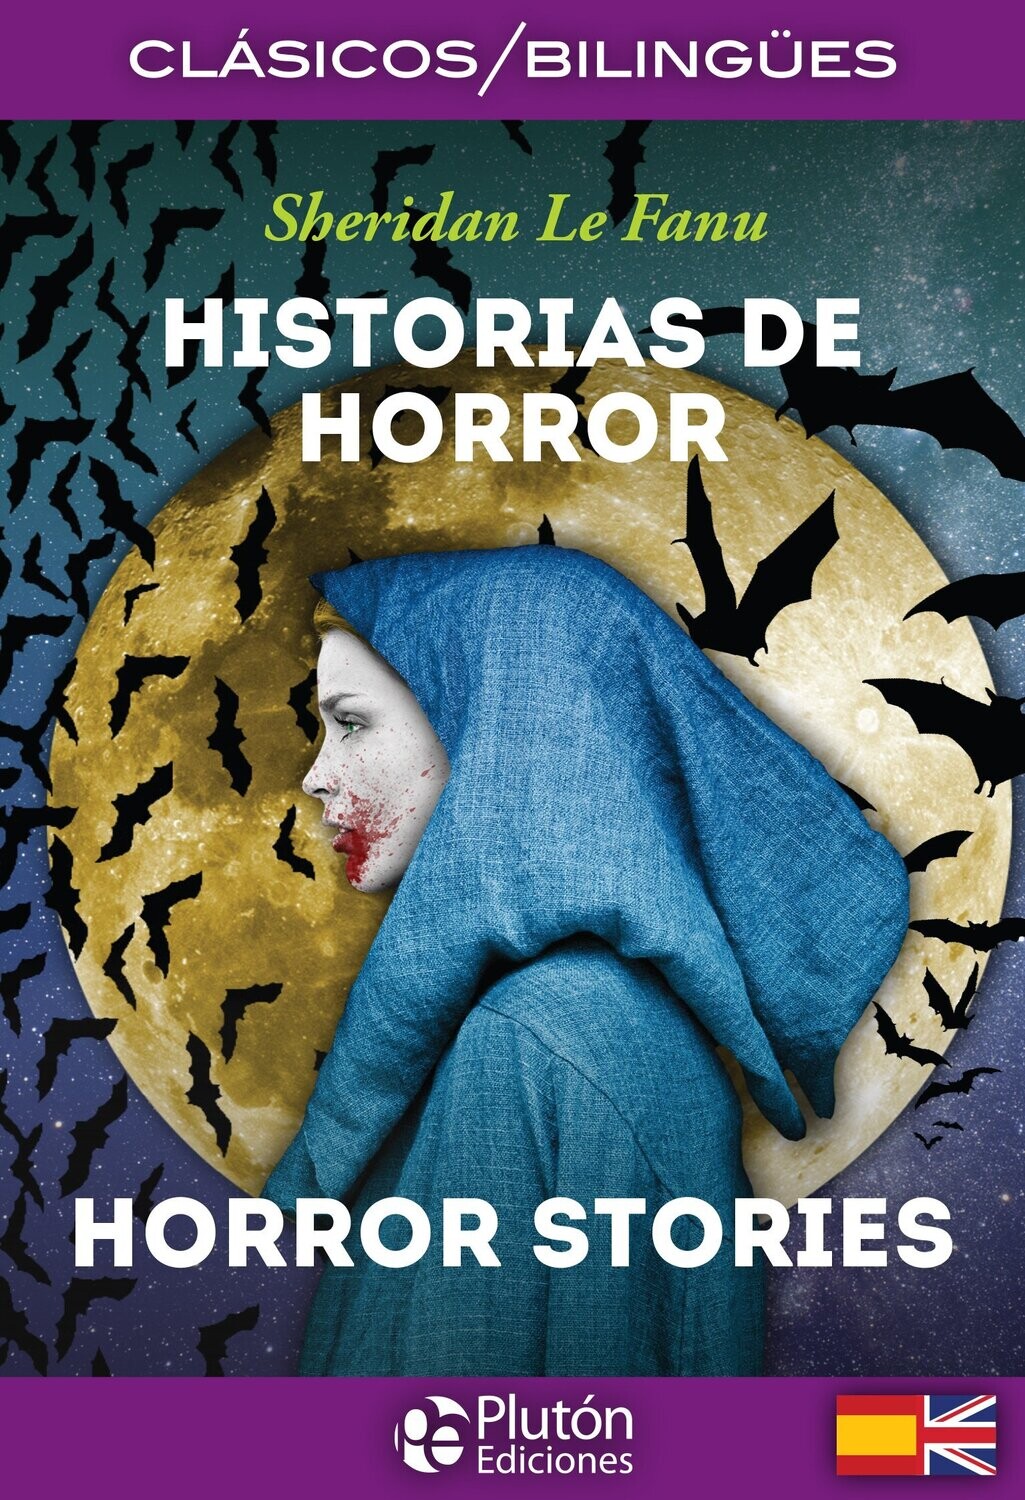 HISTORIAS DE HORROR/ HORROR STORIES (Sheridan Le Fanu)